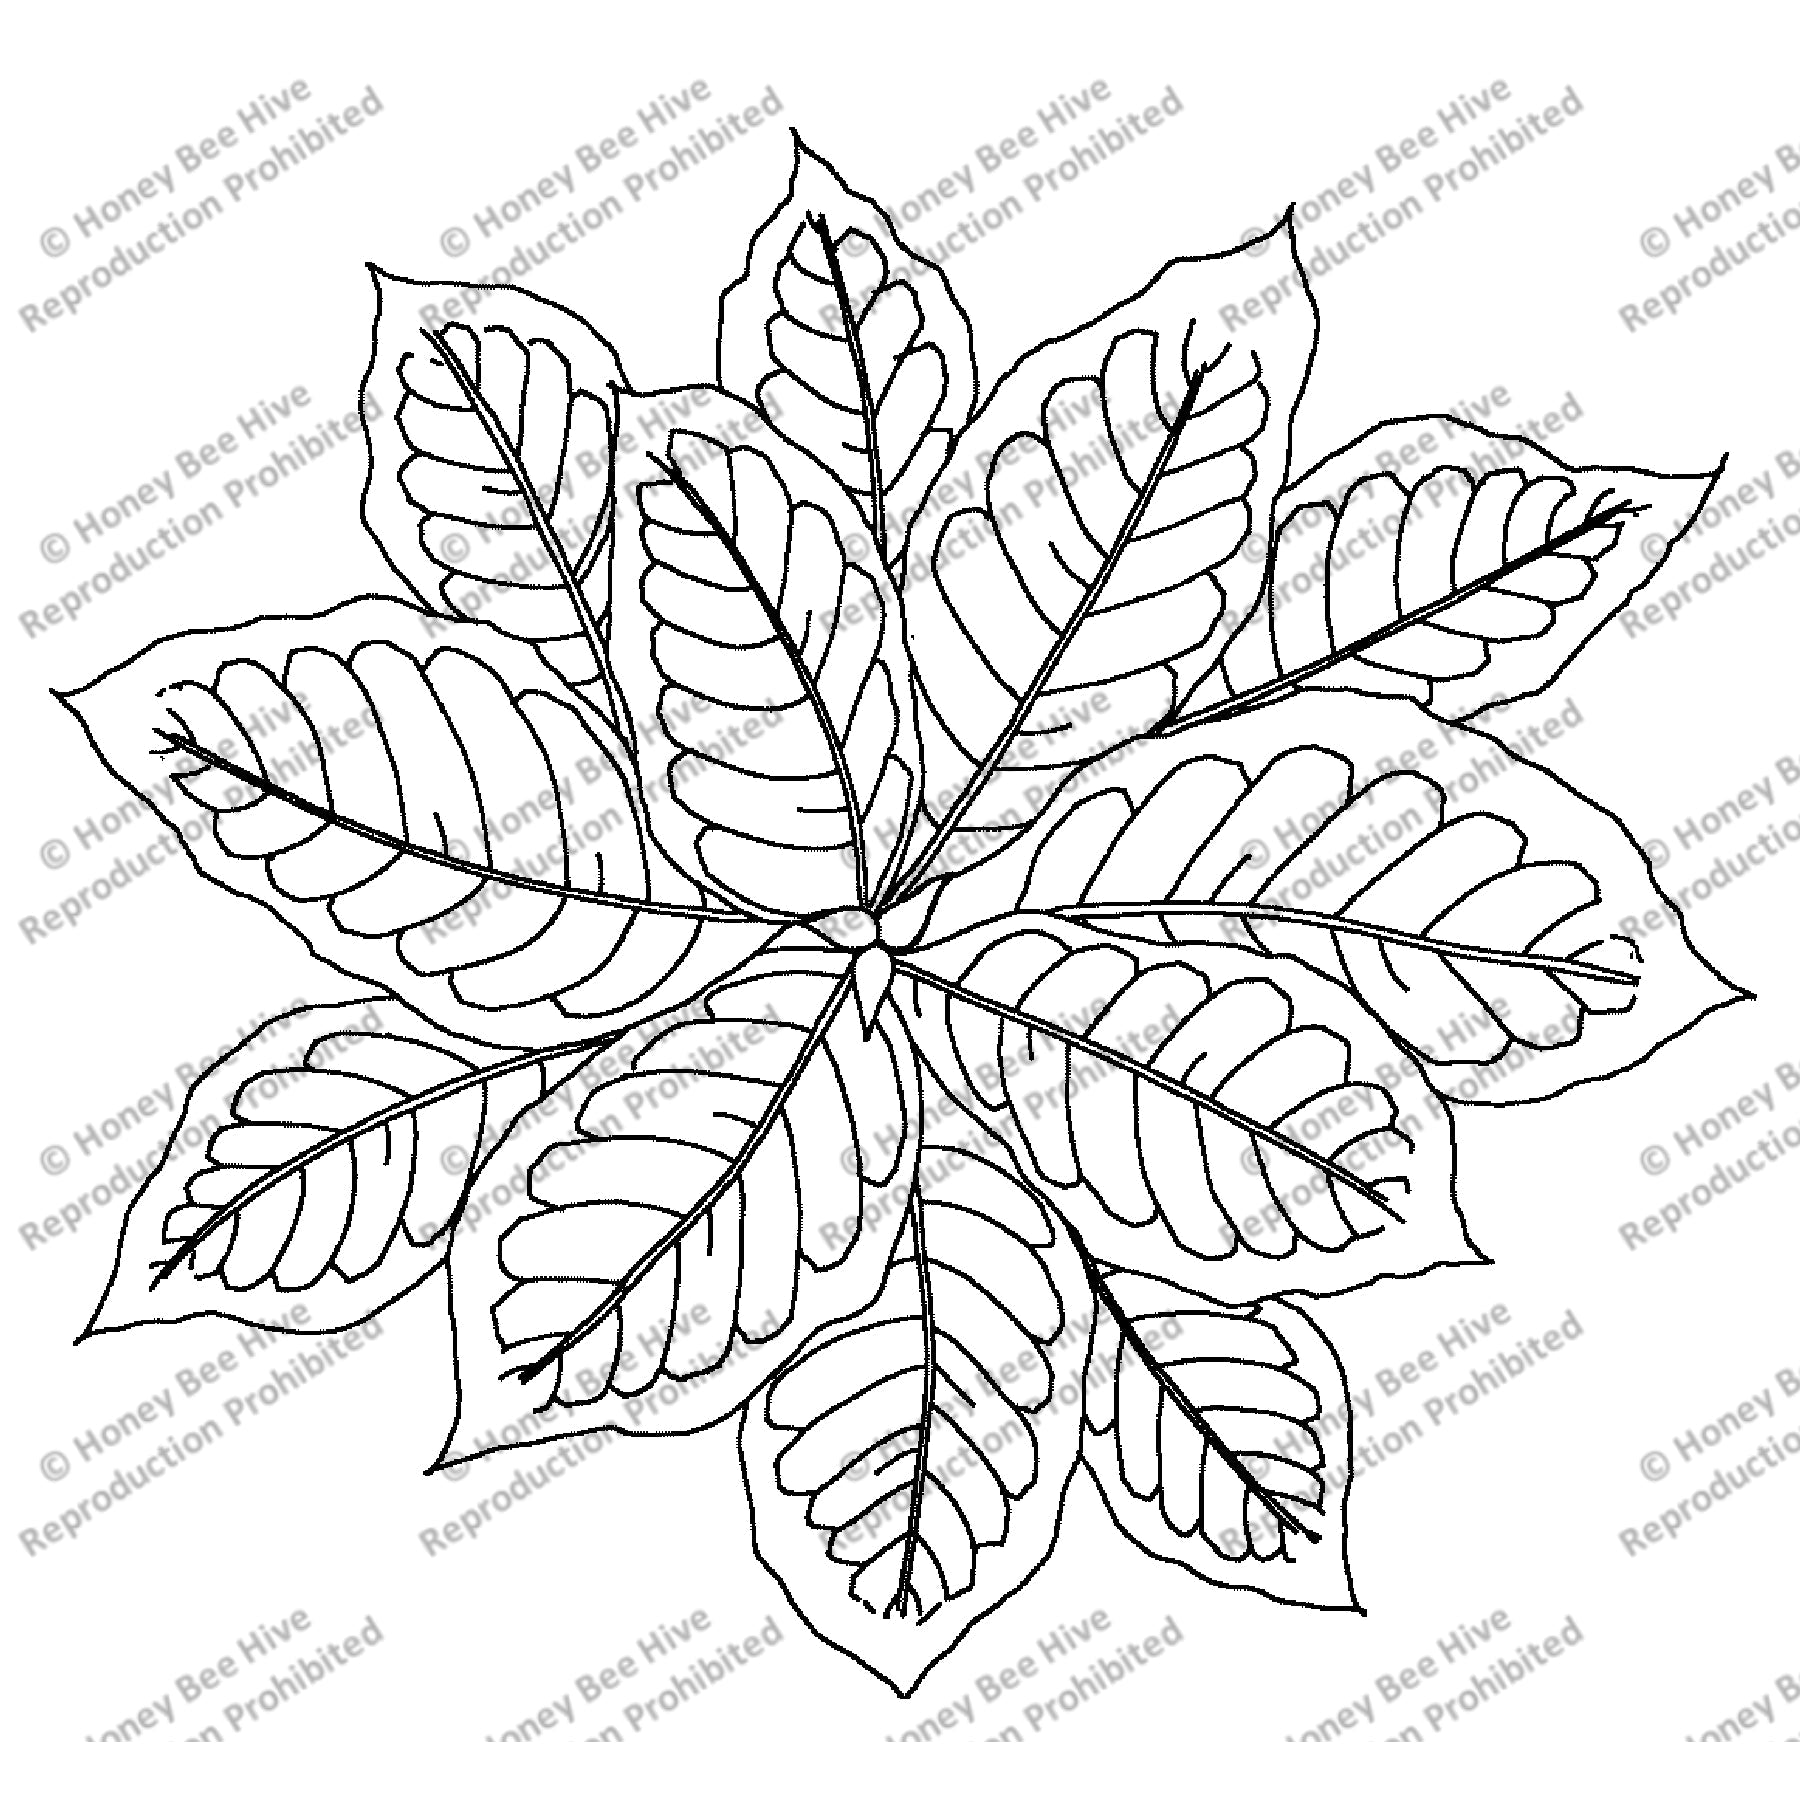 Cicle Of Croton Leaves, rug hooking pattern